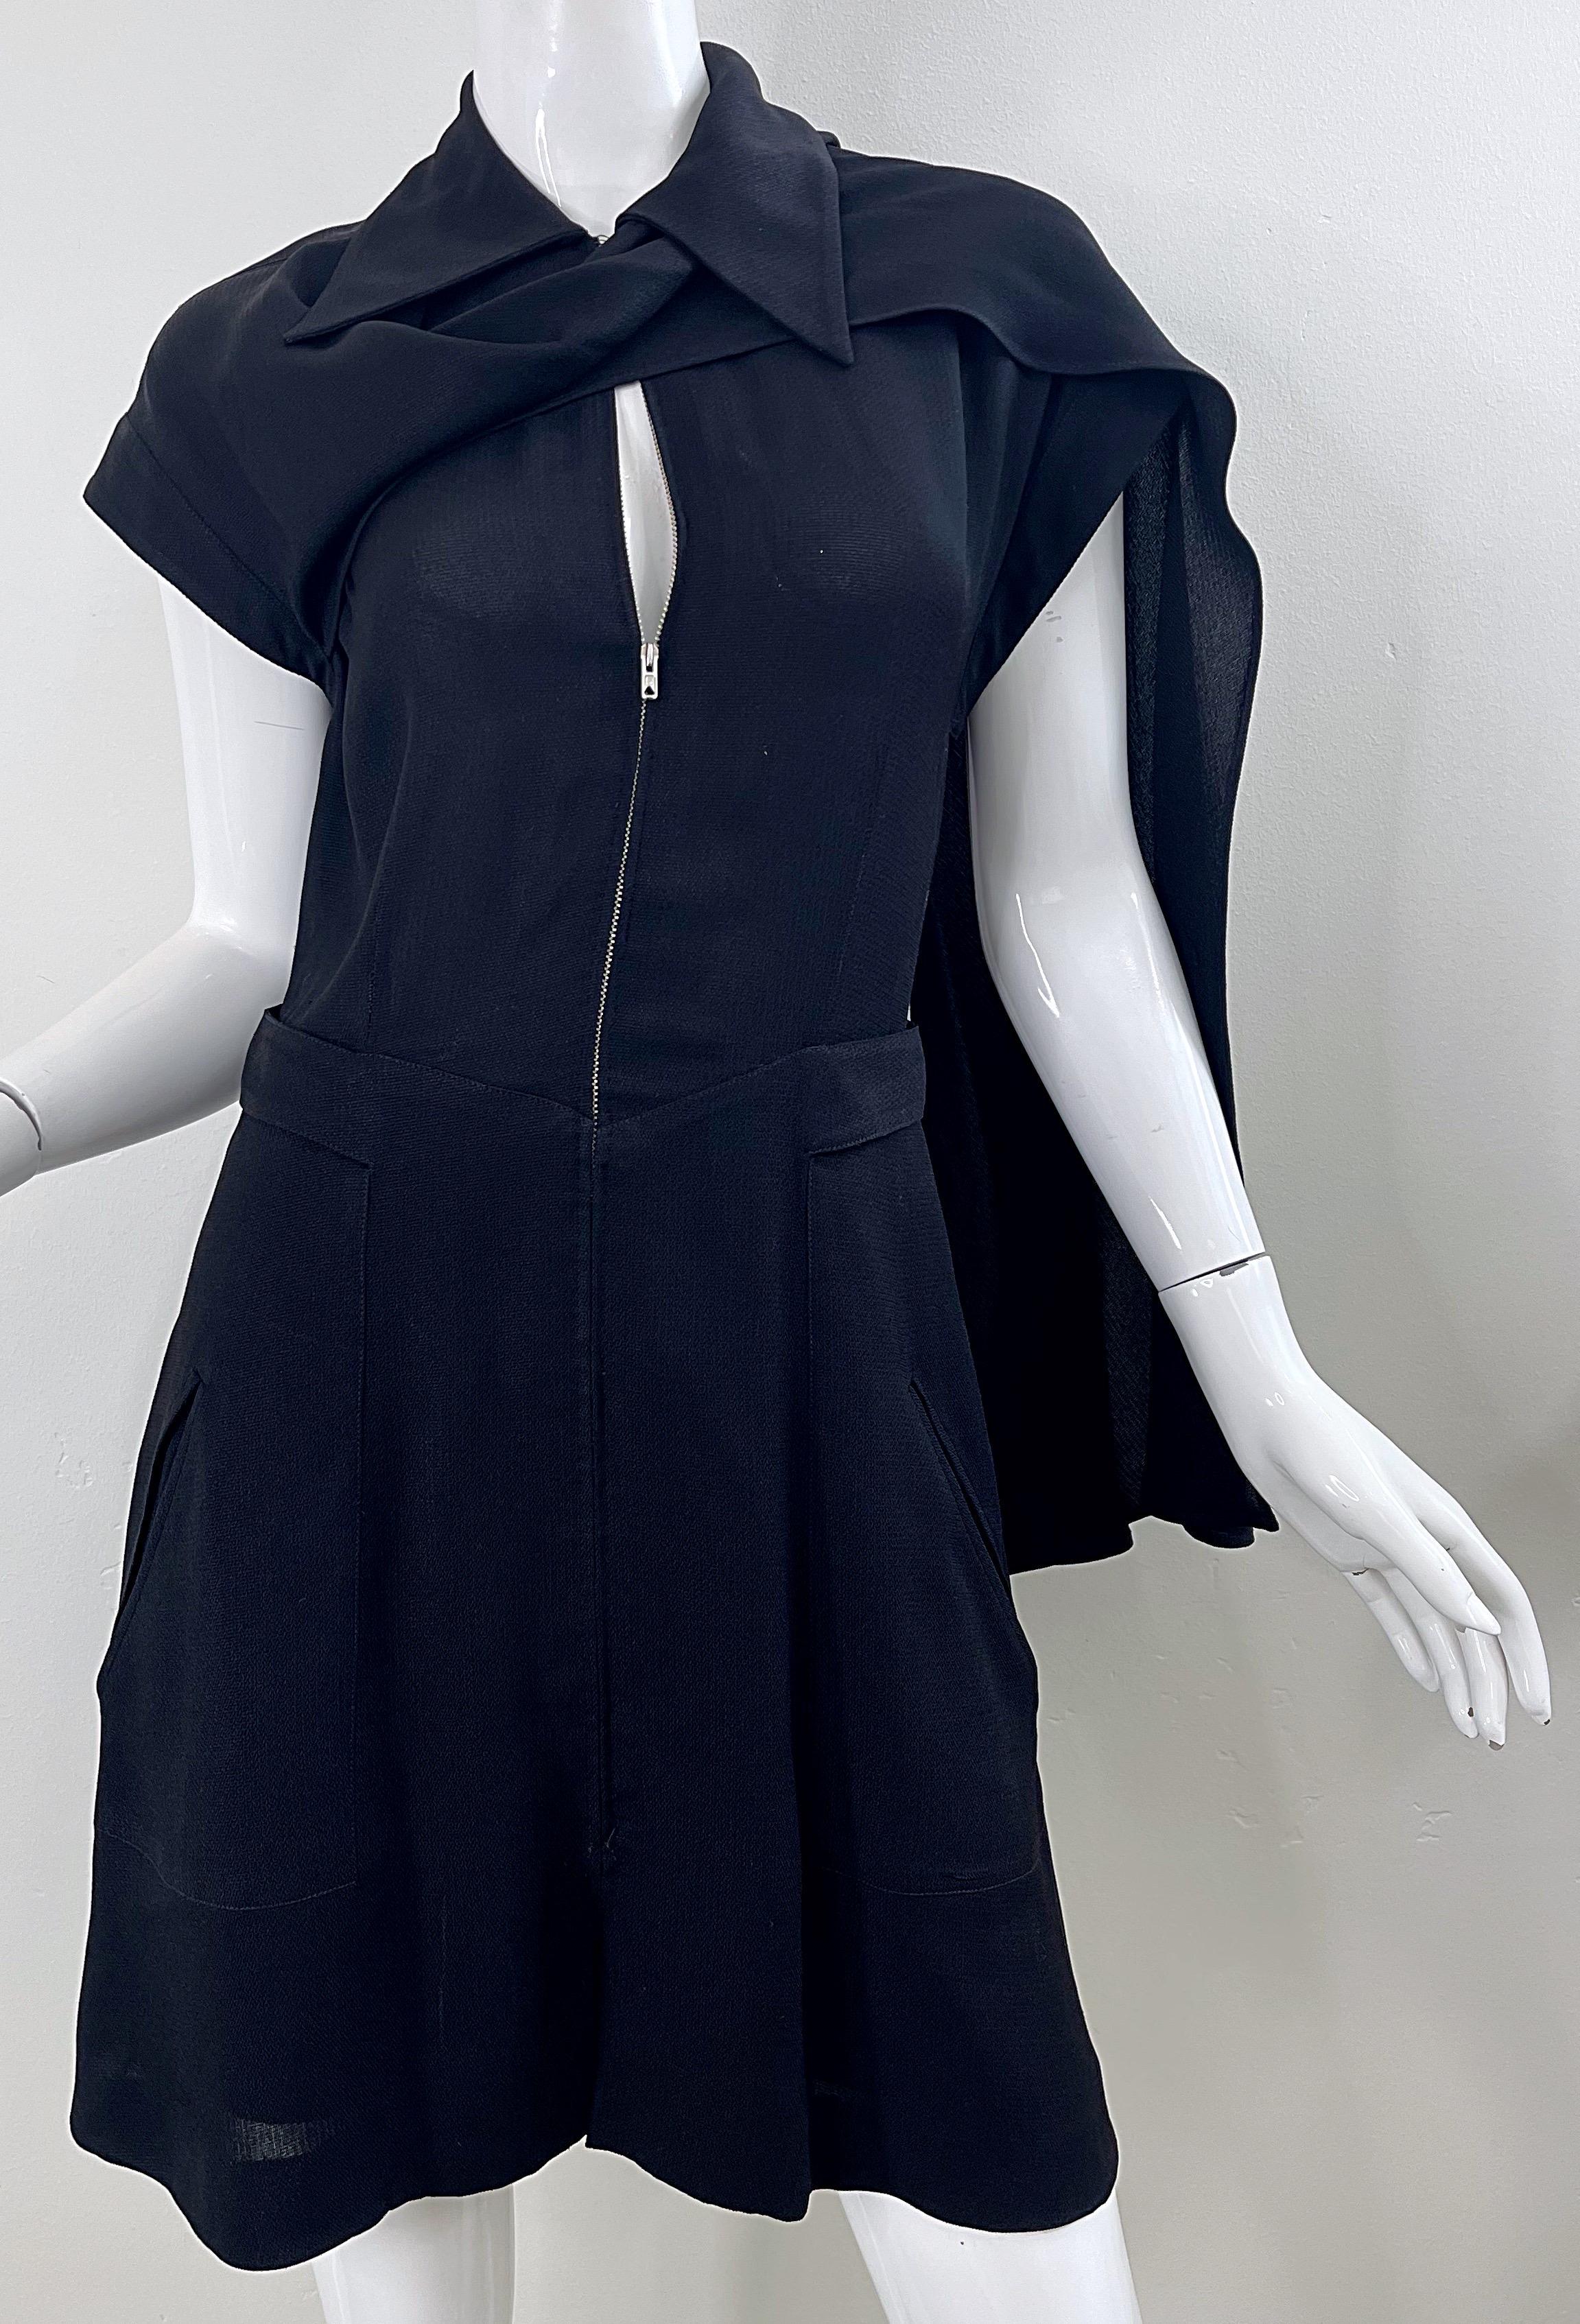 Karl Lagerfeld 1990s Black Avant Garde Vintage 90s Sash Zipper Mini Dress For Sale 3